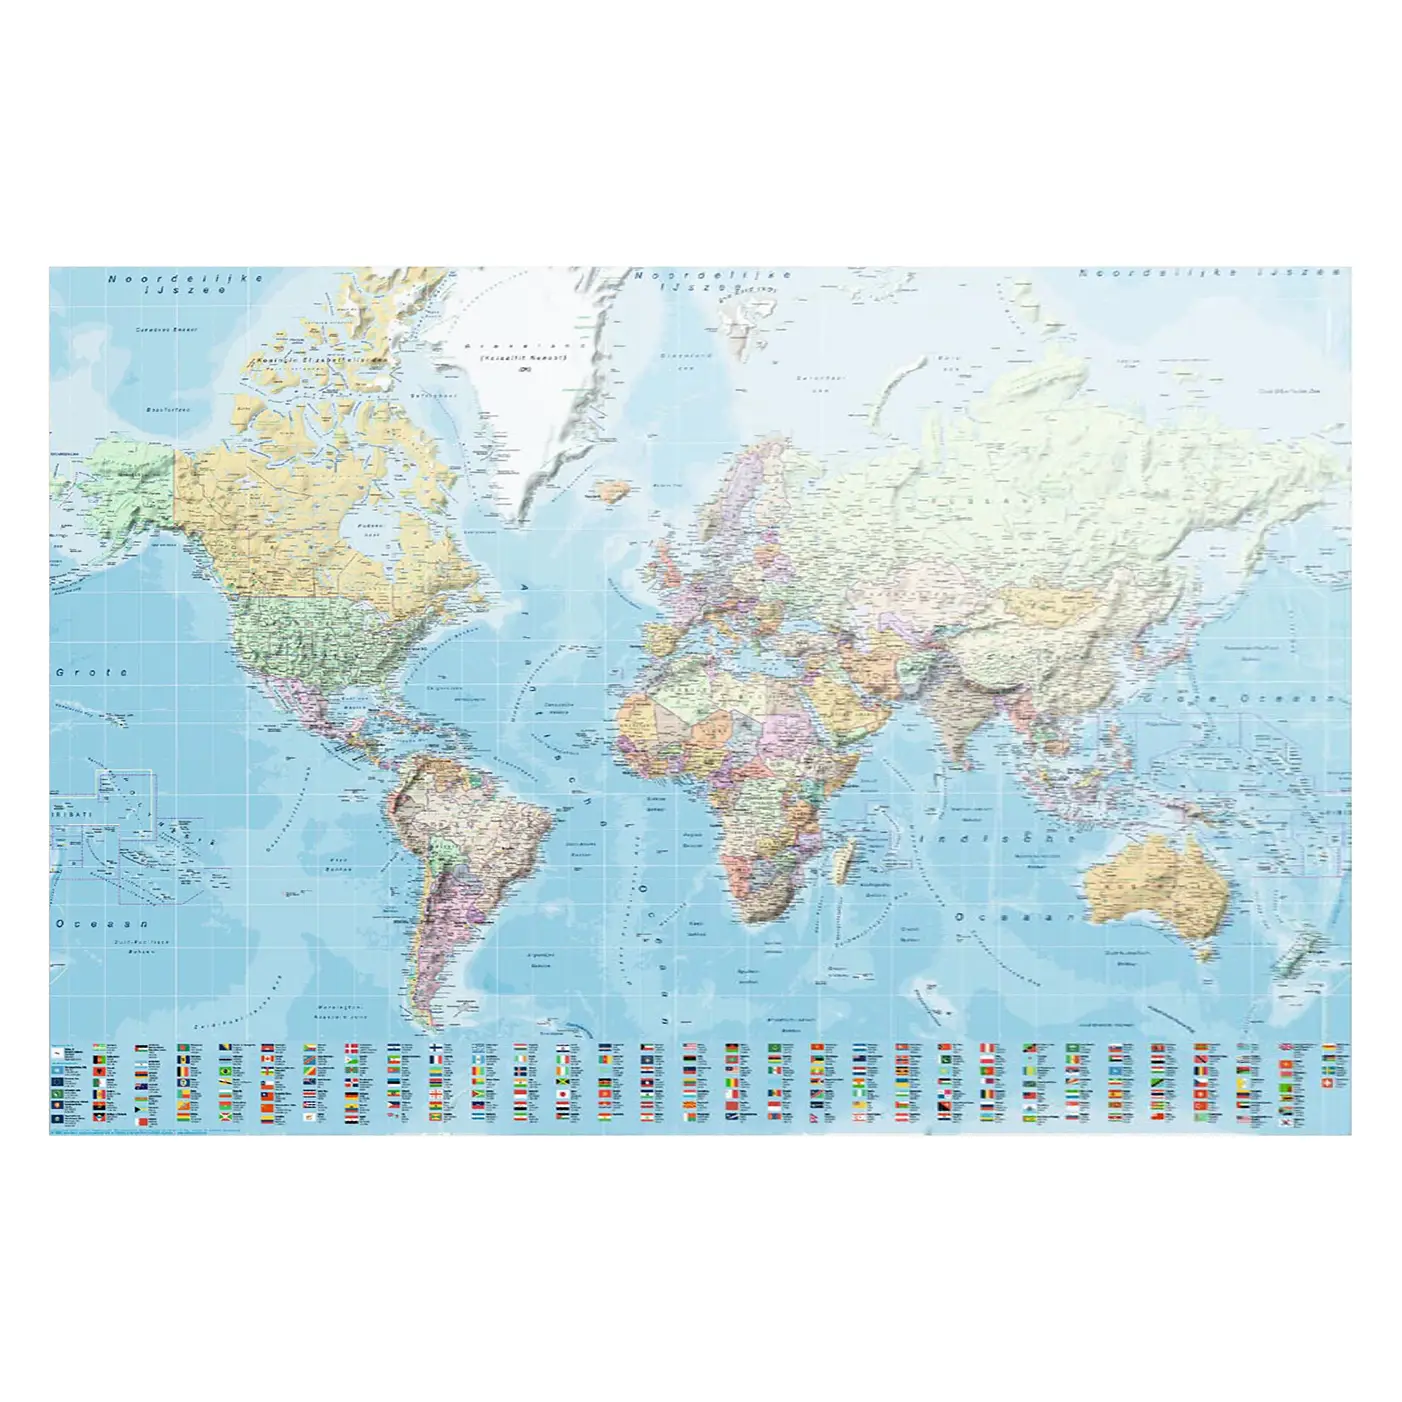 Bild Weltkarte Flaggen Niederl盲ndisch